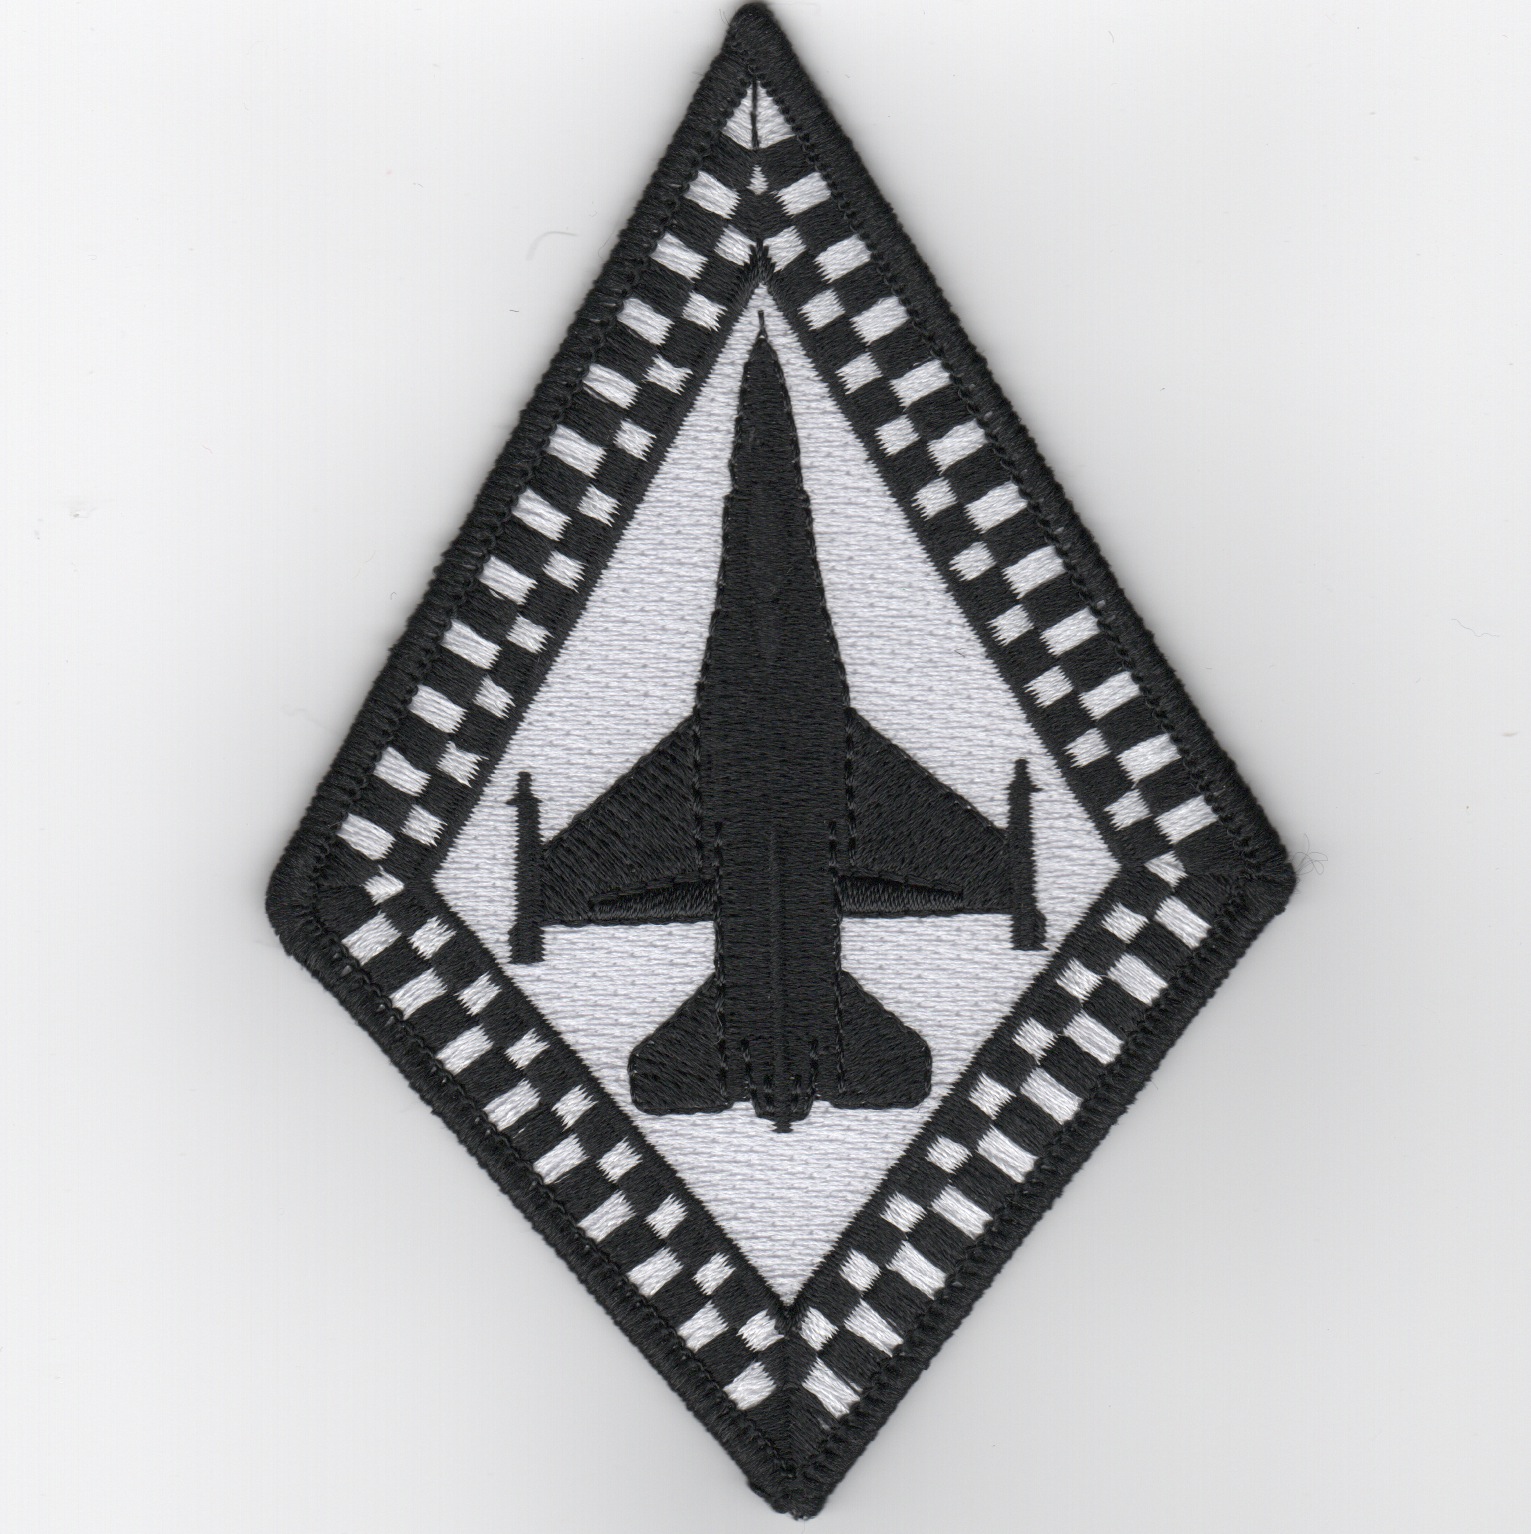 93d FS 'Aircraft' Patch (B&W)